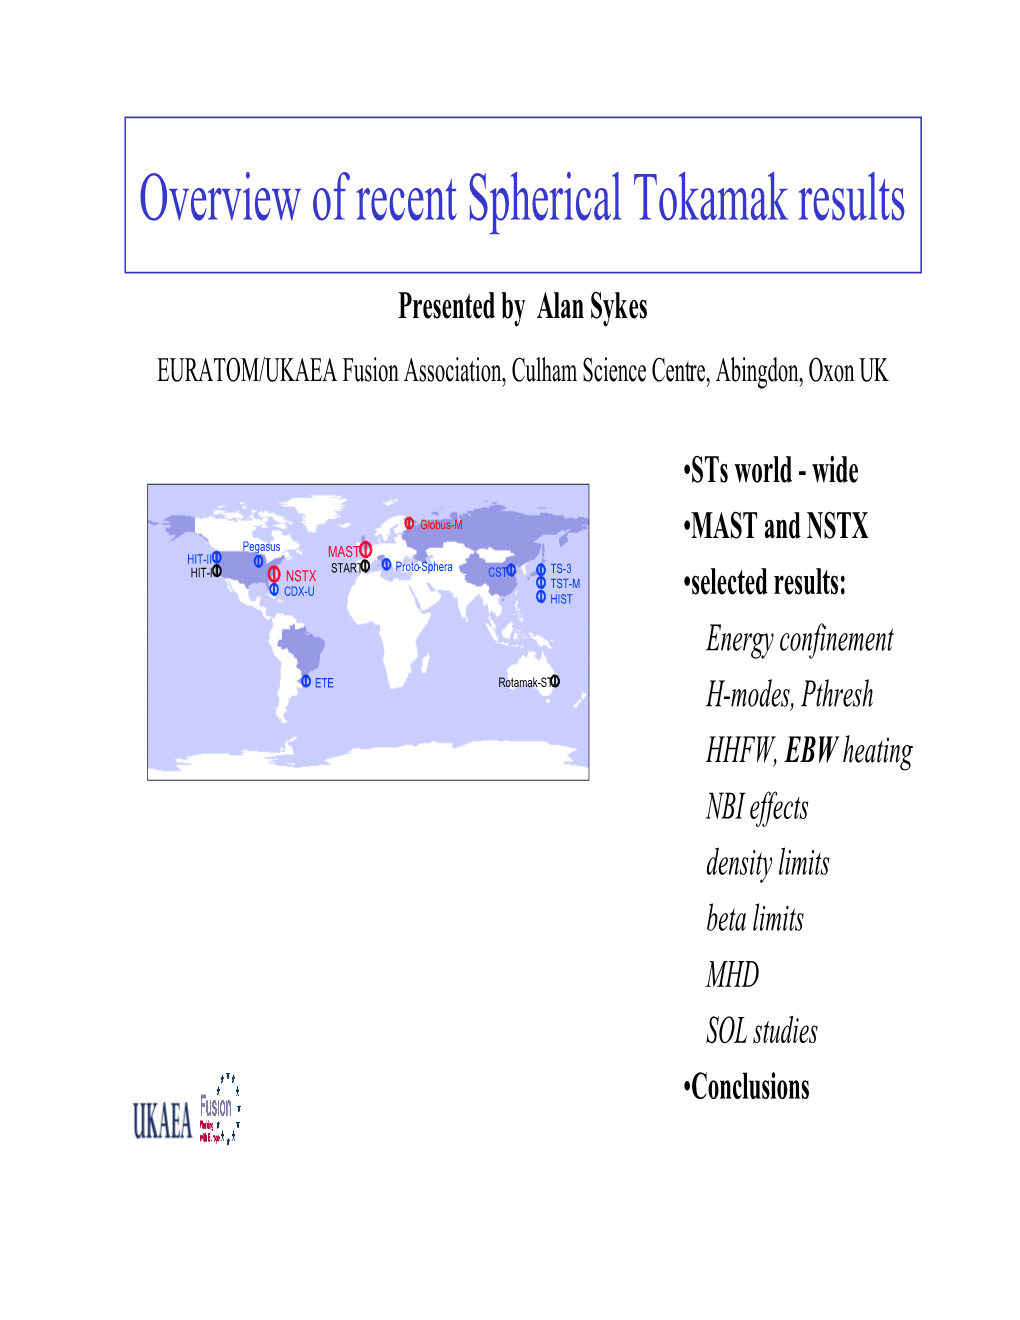 Overview of Recent Spherical Tokamak Results